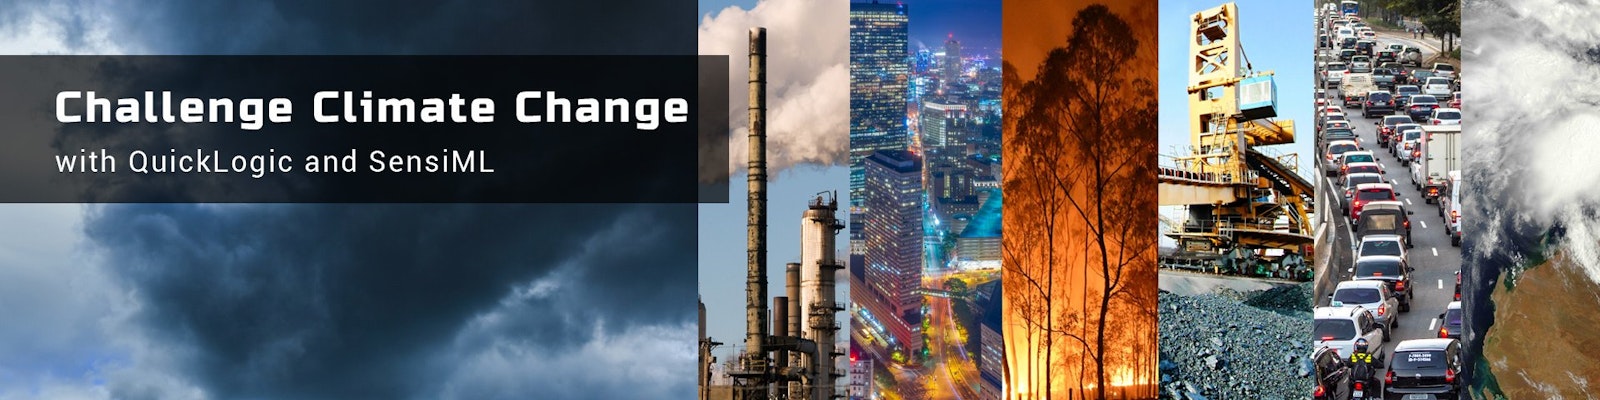 Challenge Climate Change